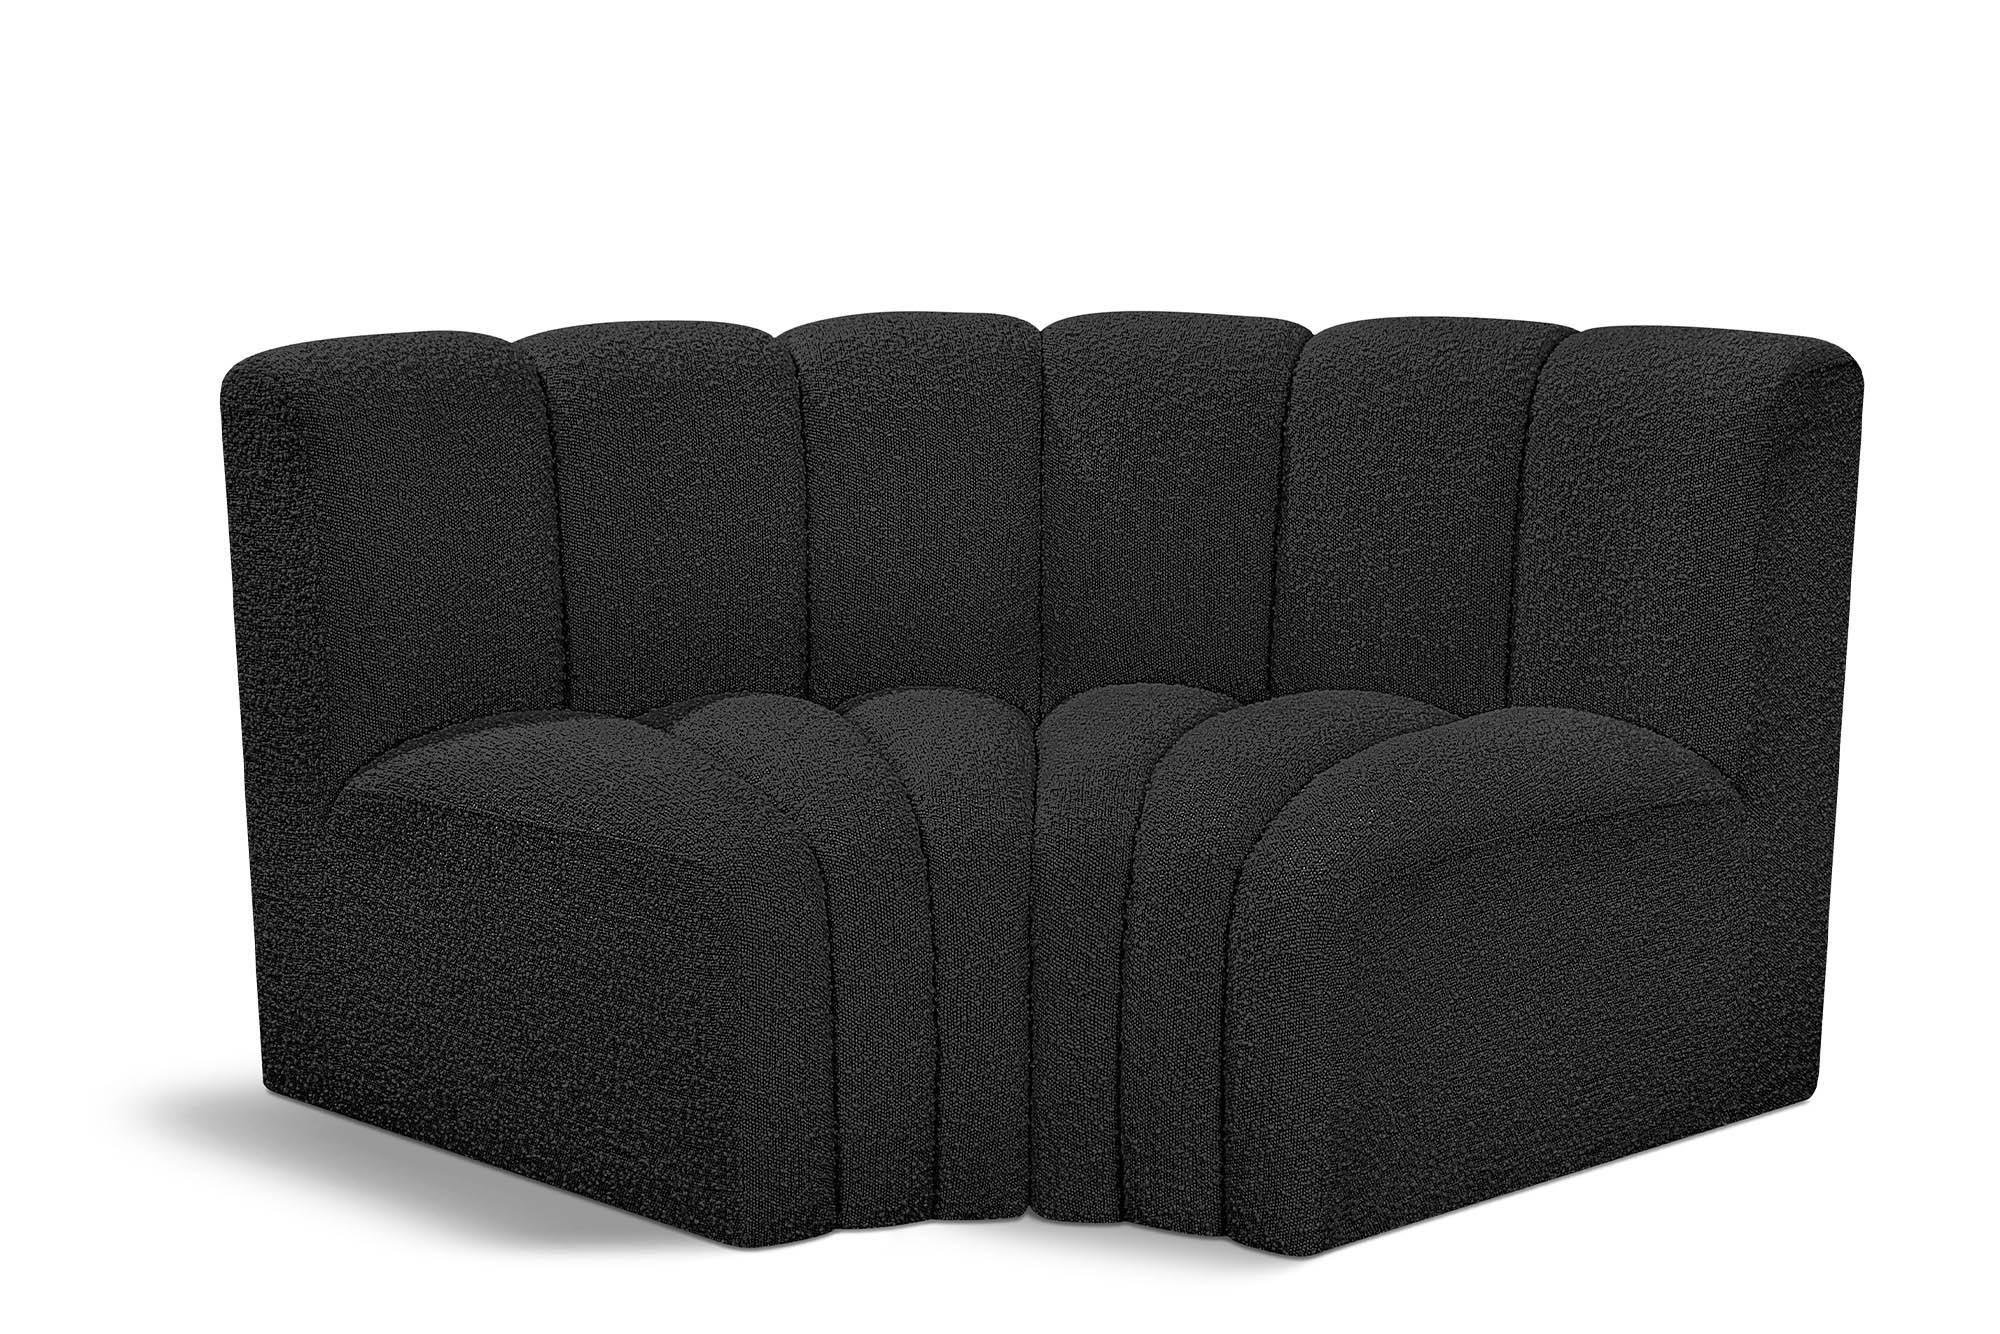 Contemporary, Modern Modular Sectional Sofa ARC 102Black-S2B 102Black-S2B in Black 